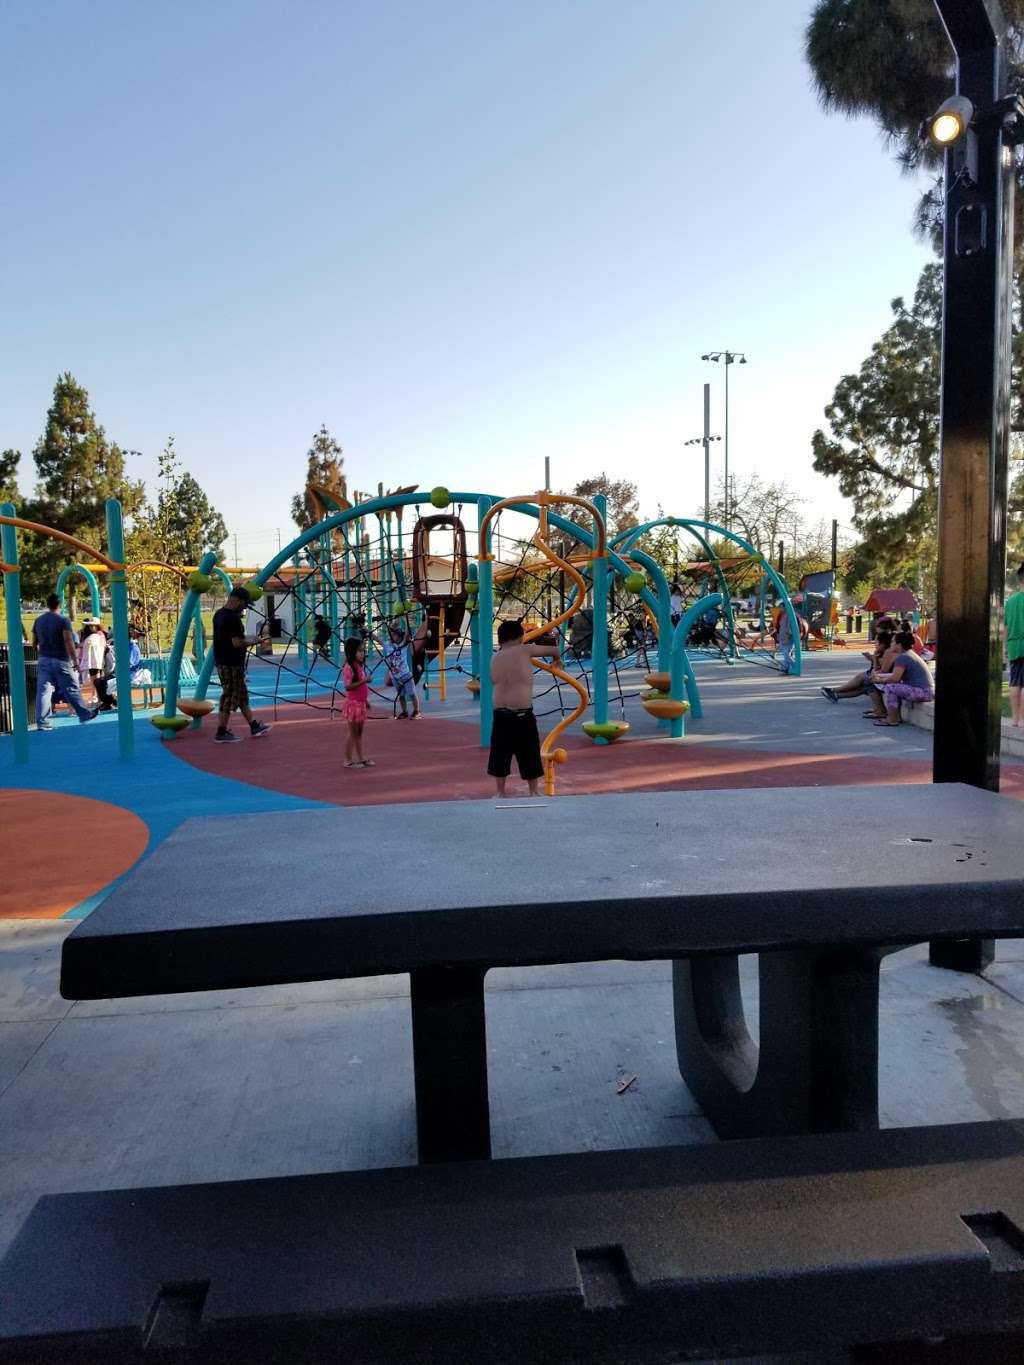 Ponderosa Park Water Play Zone | Un Named Rd, Anaheim, CA 92802, USA